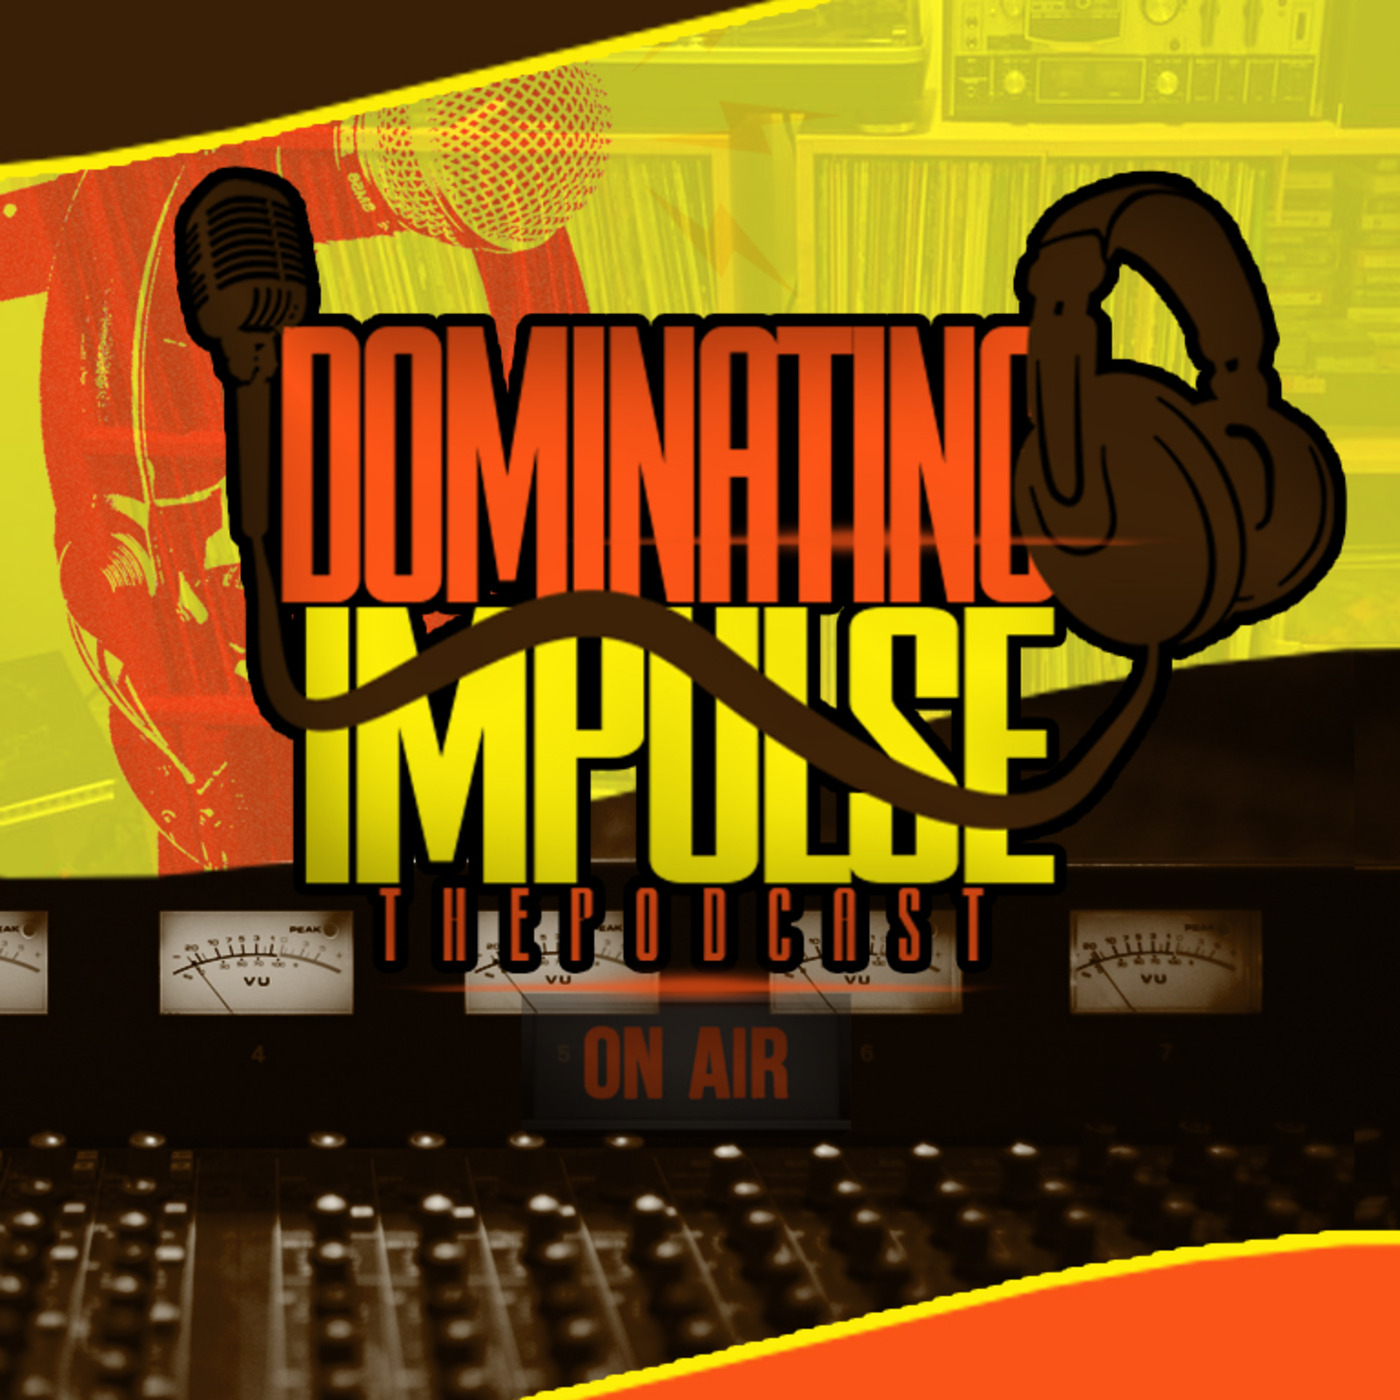 Dominating Impulse: The Podcast